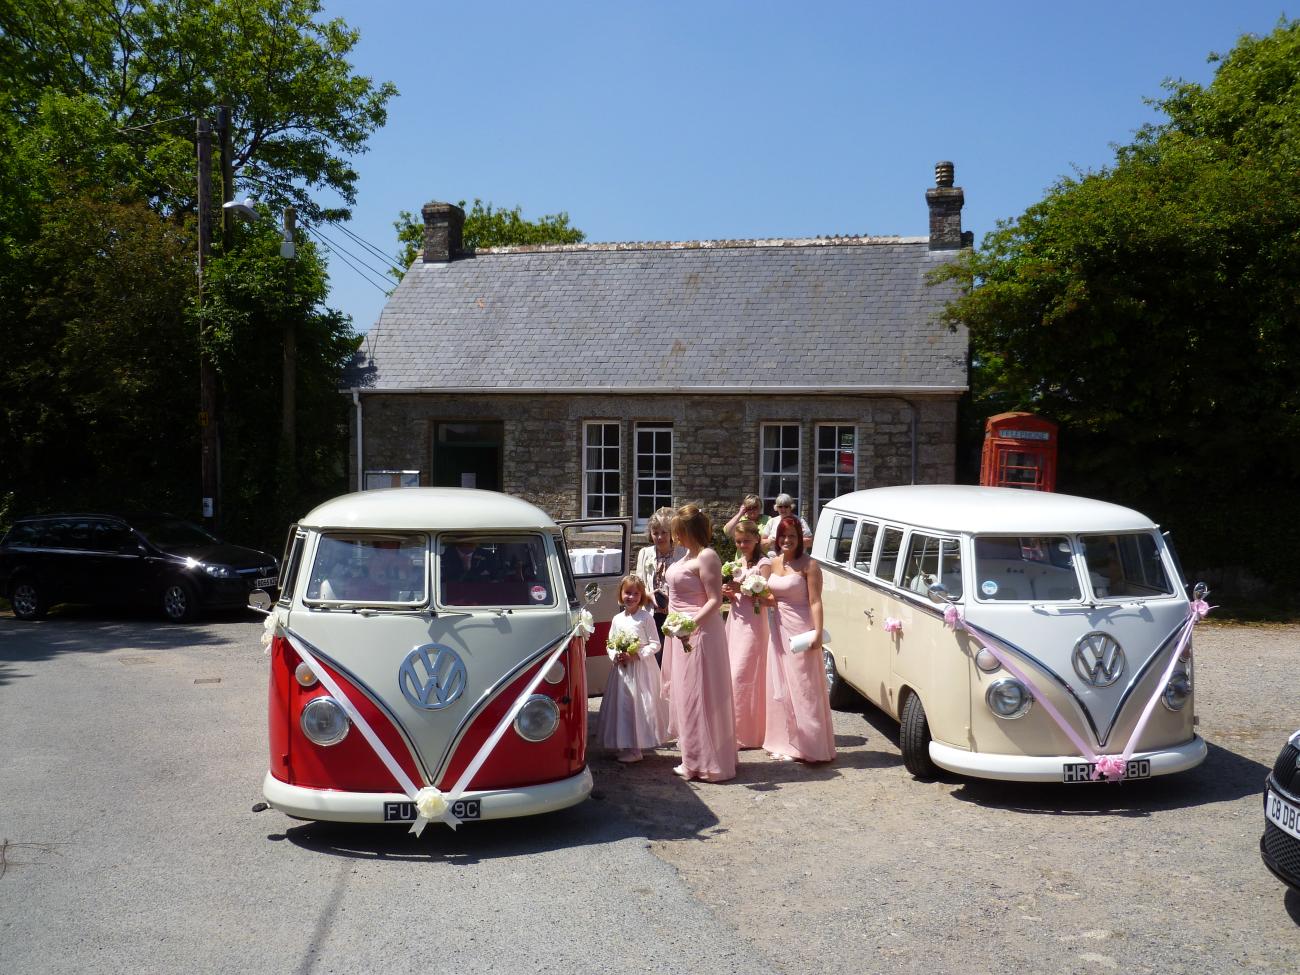 Three classic VW wedding campers